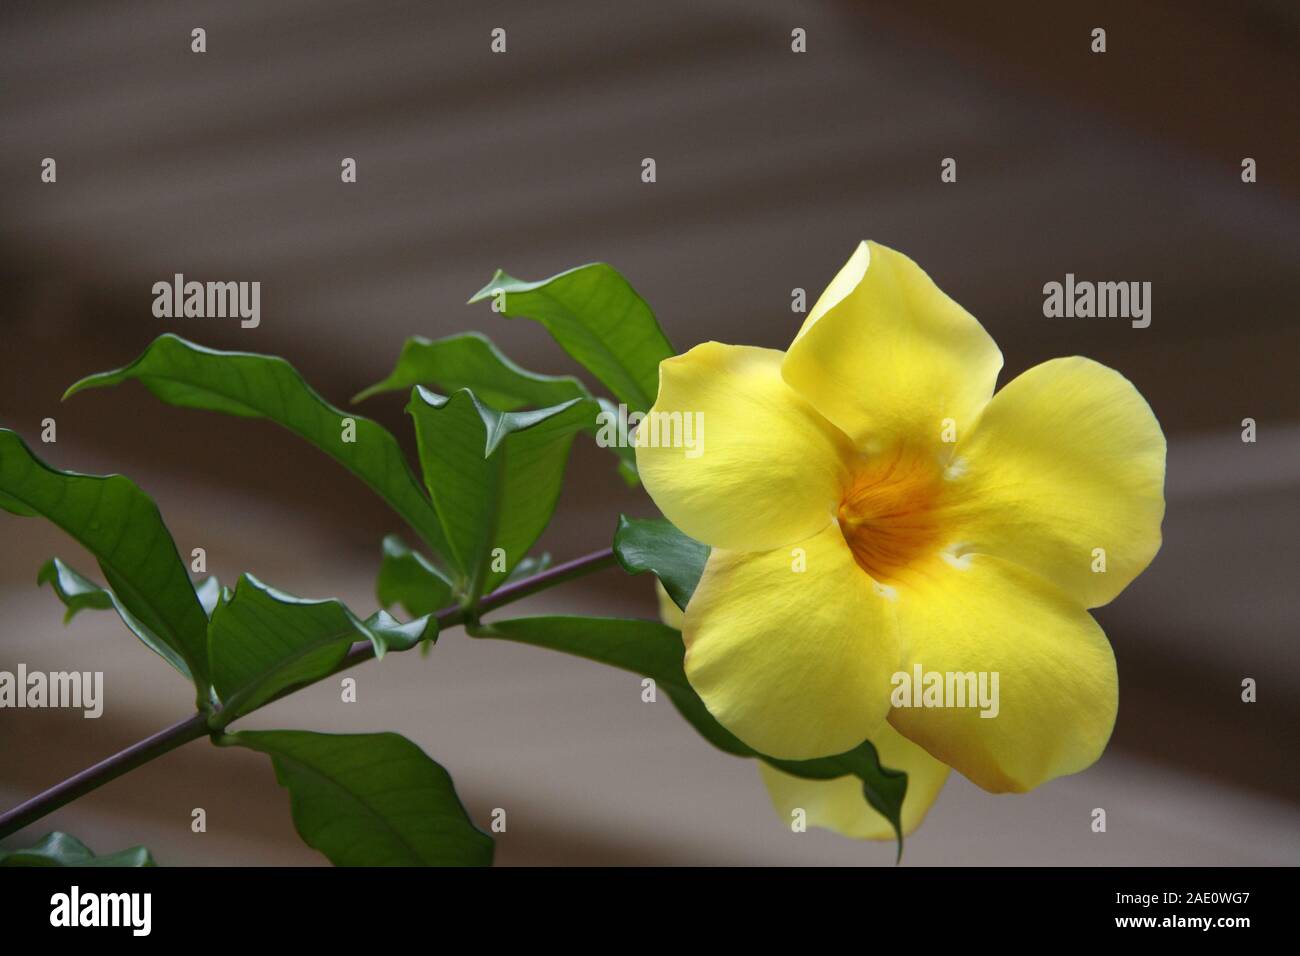 Trompetenblume des gelben Engels (Allamanda cathartica) Stockfoto